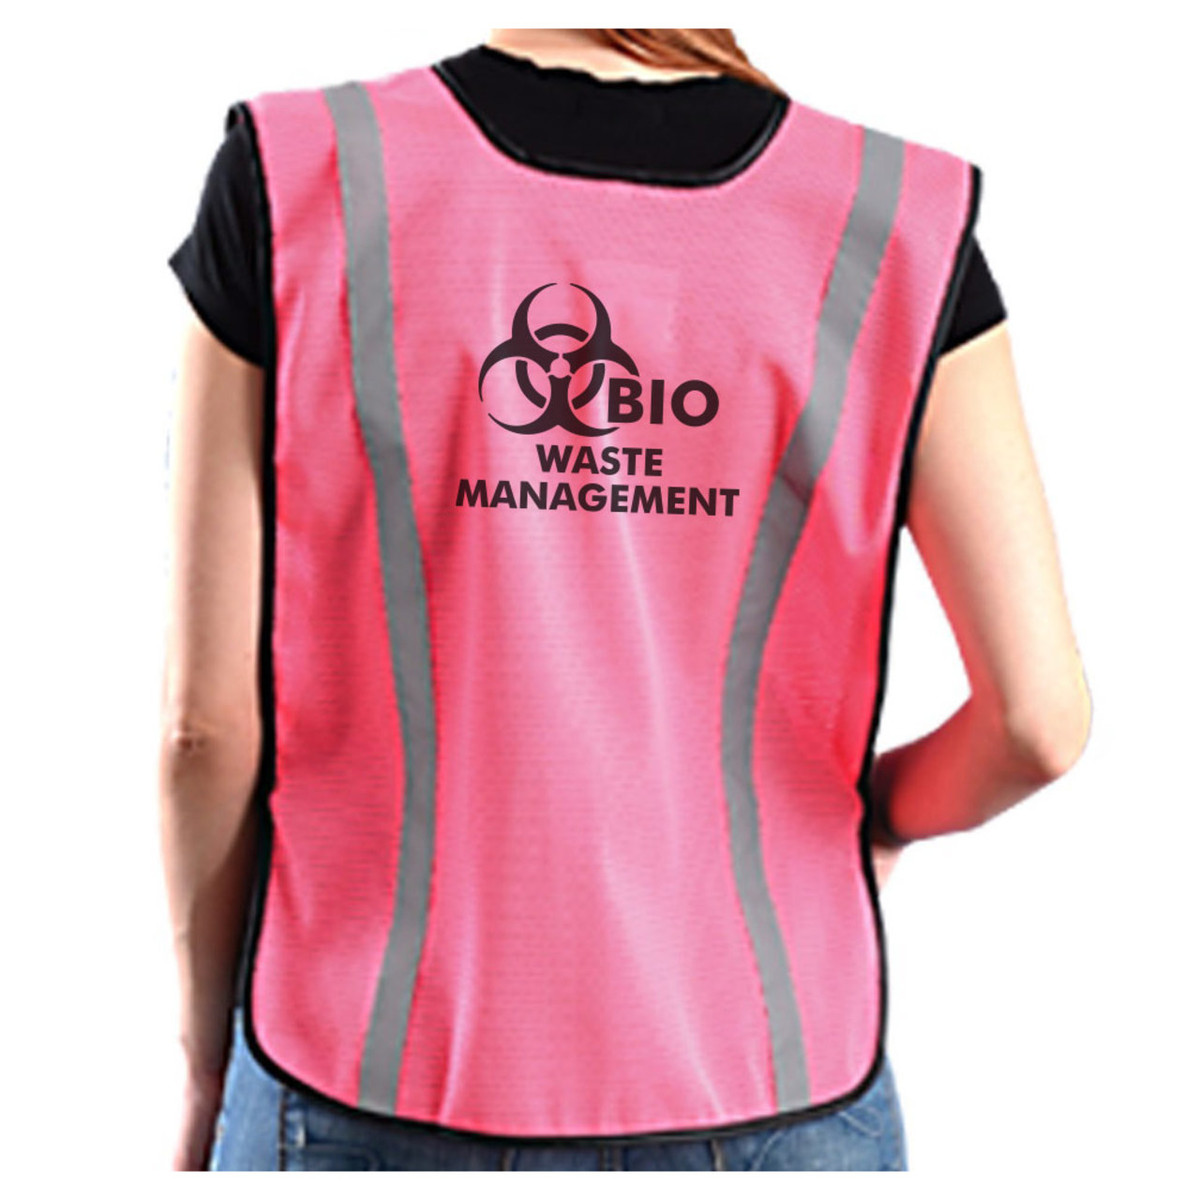 Soft Mesh Light Pink Vests  Texas America Safety Company